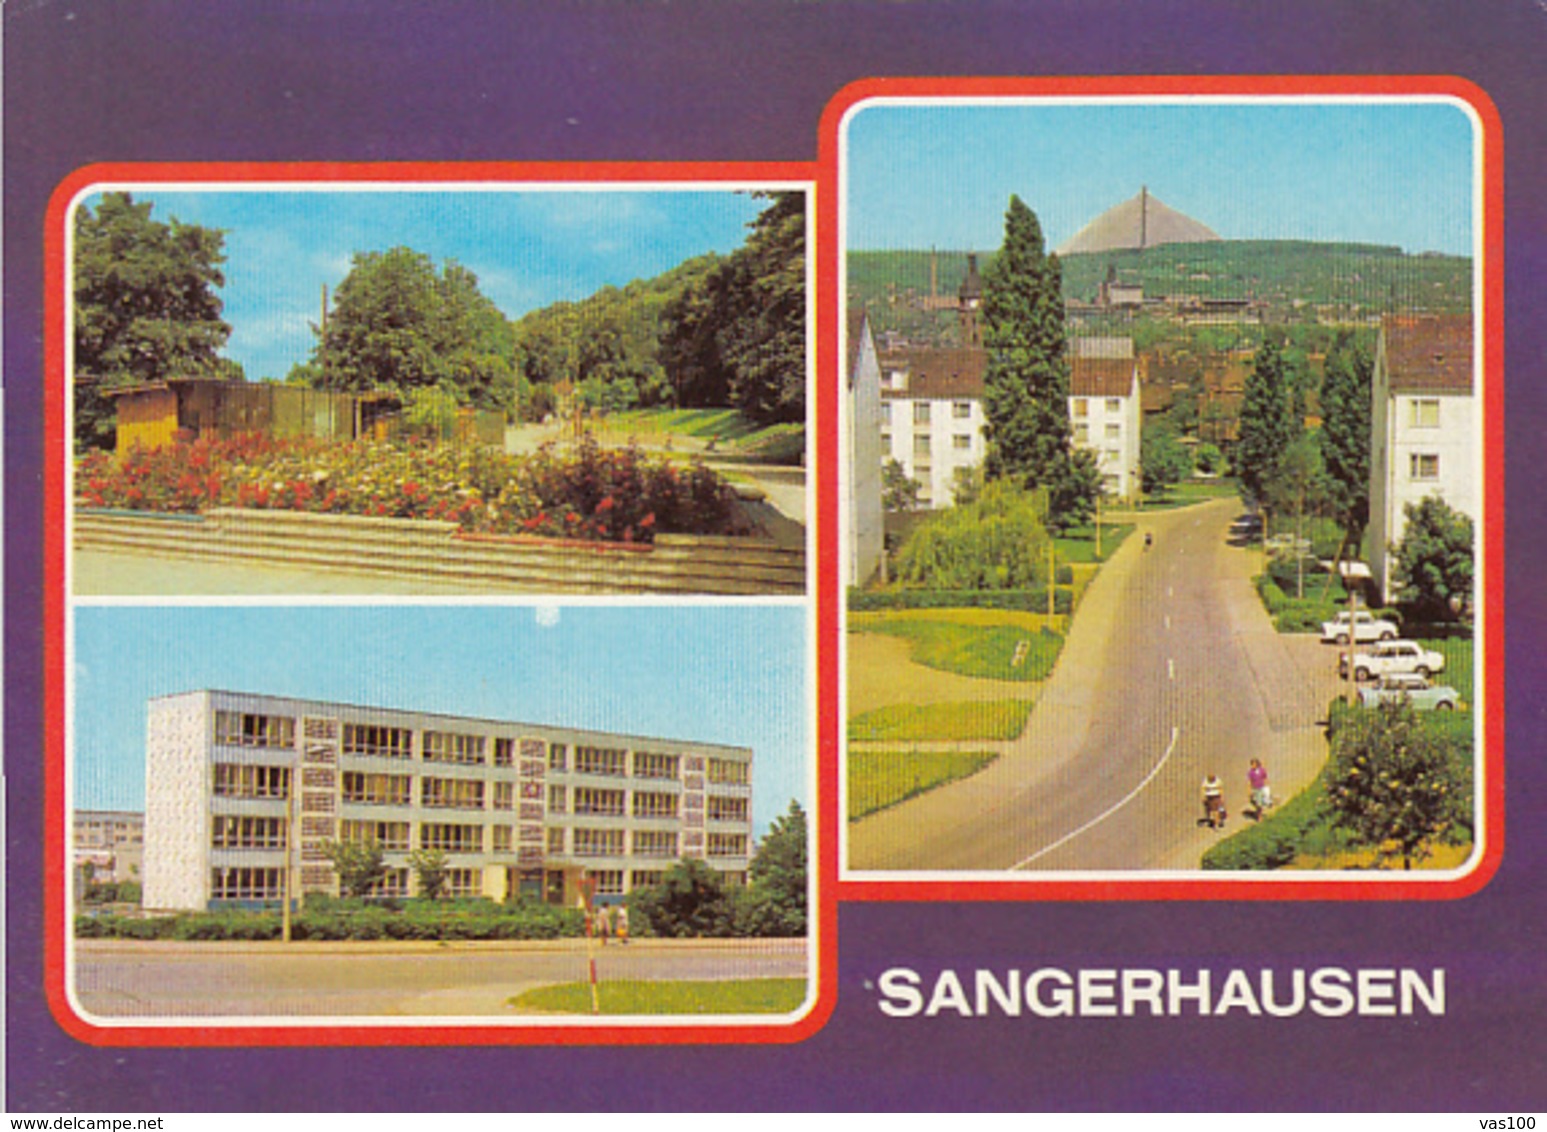 80924- SANGERHAUSEN- PARK, STREET VIEWS, CAR - Sangerhausen